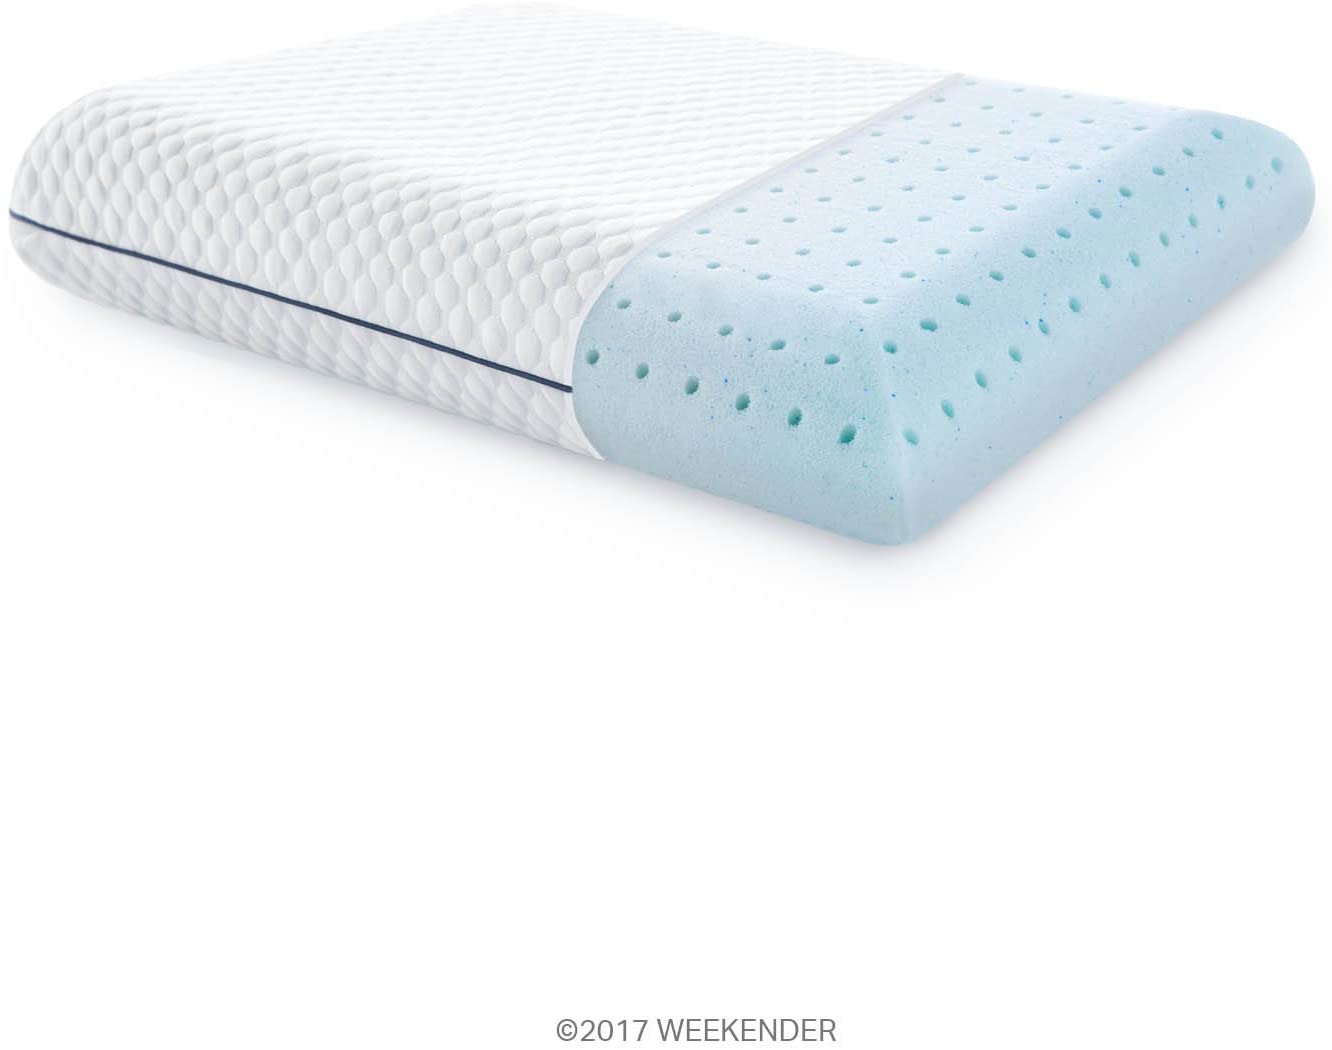 Weekender Removable Cover Memory Foam Gel Pillow